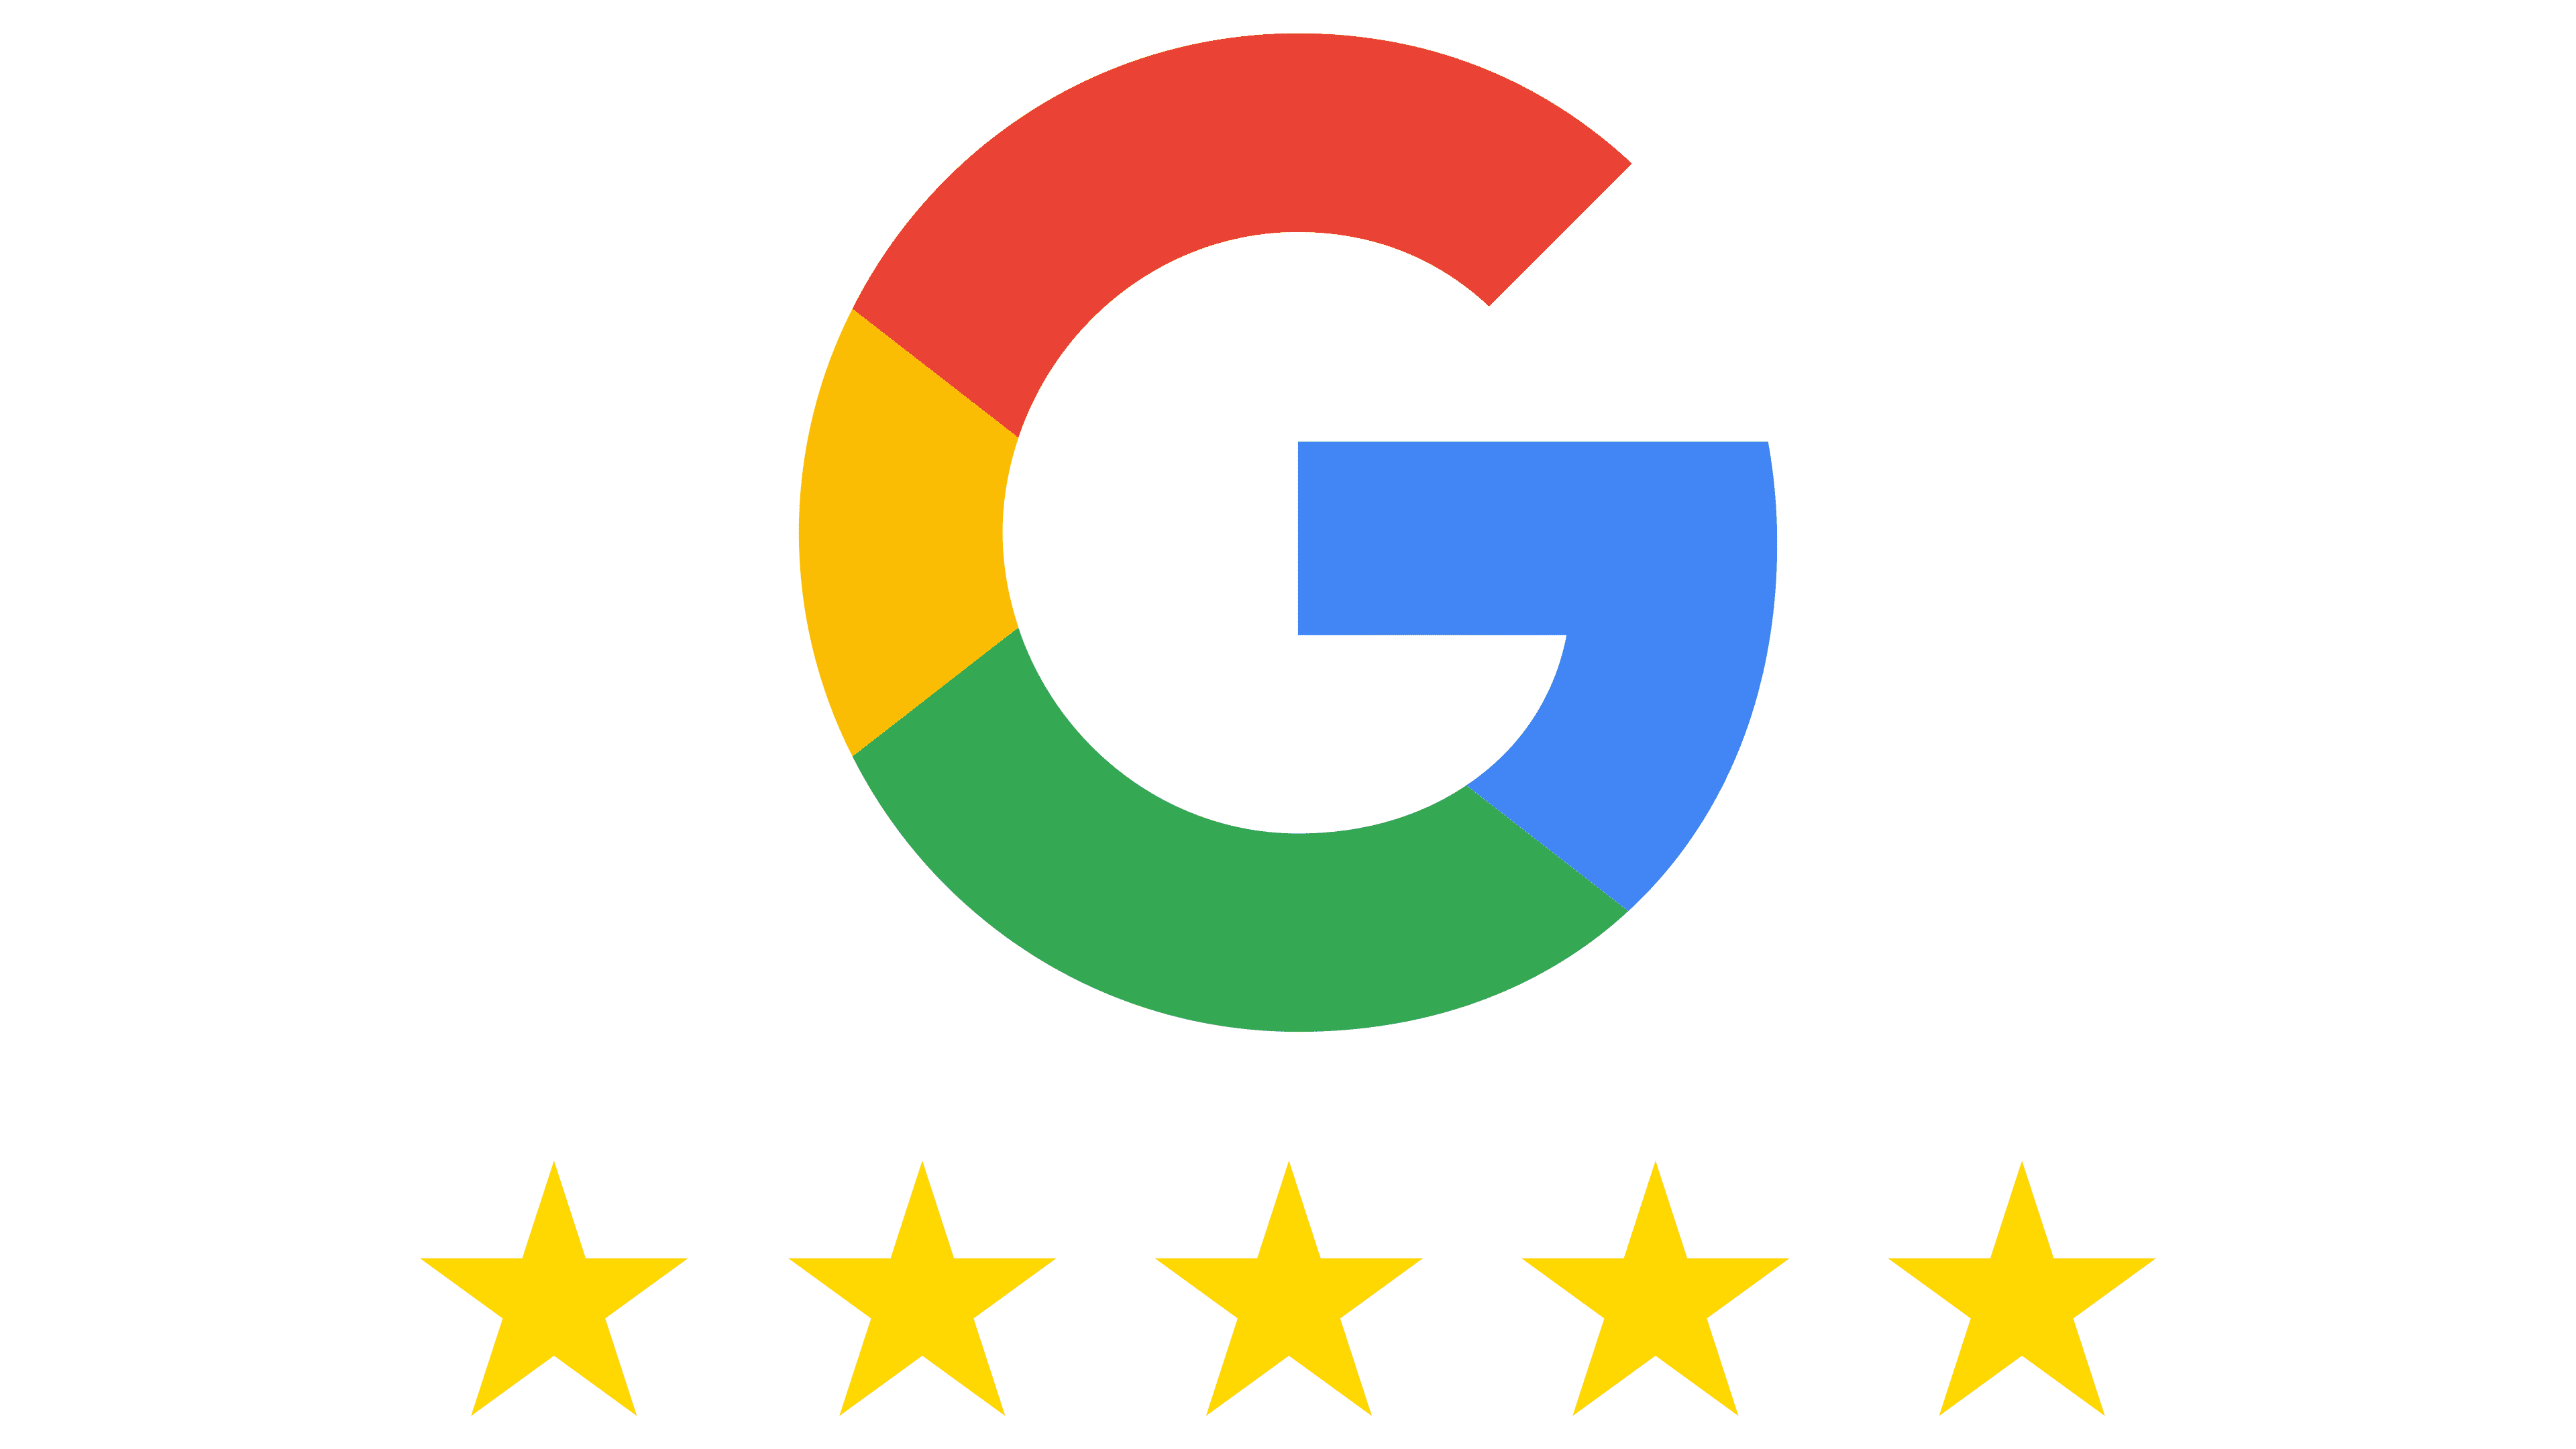 google rating icon